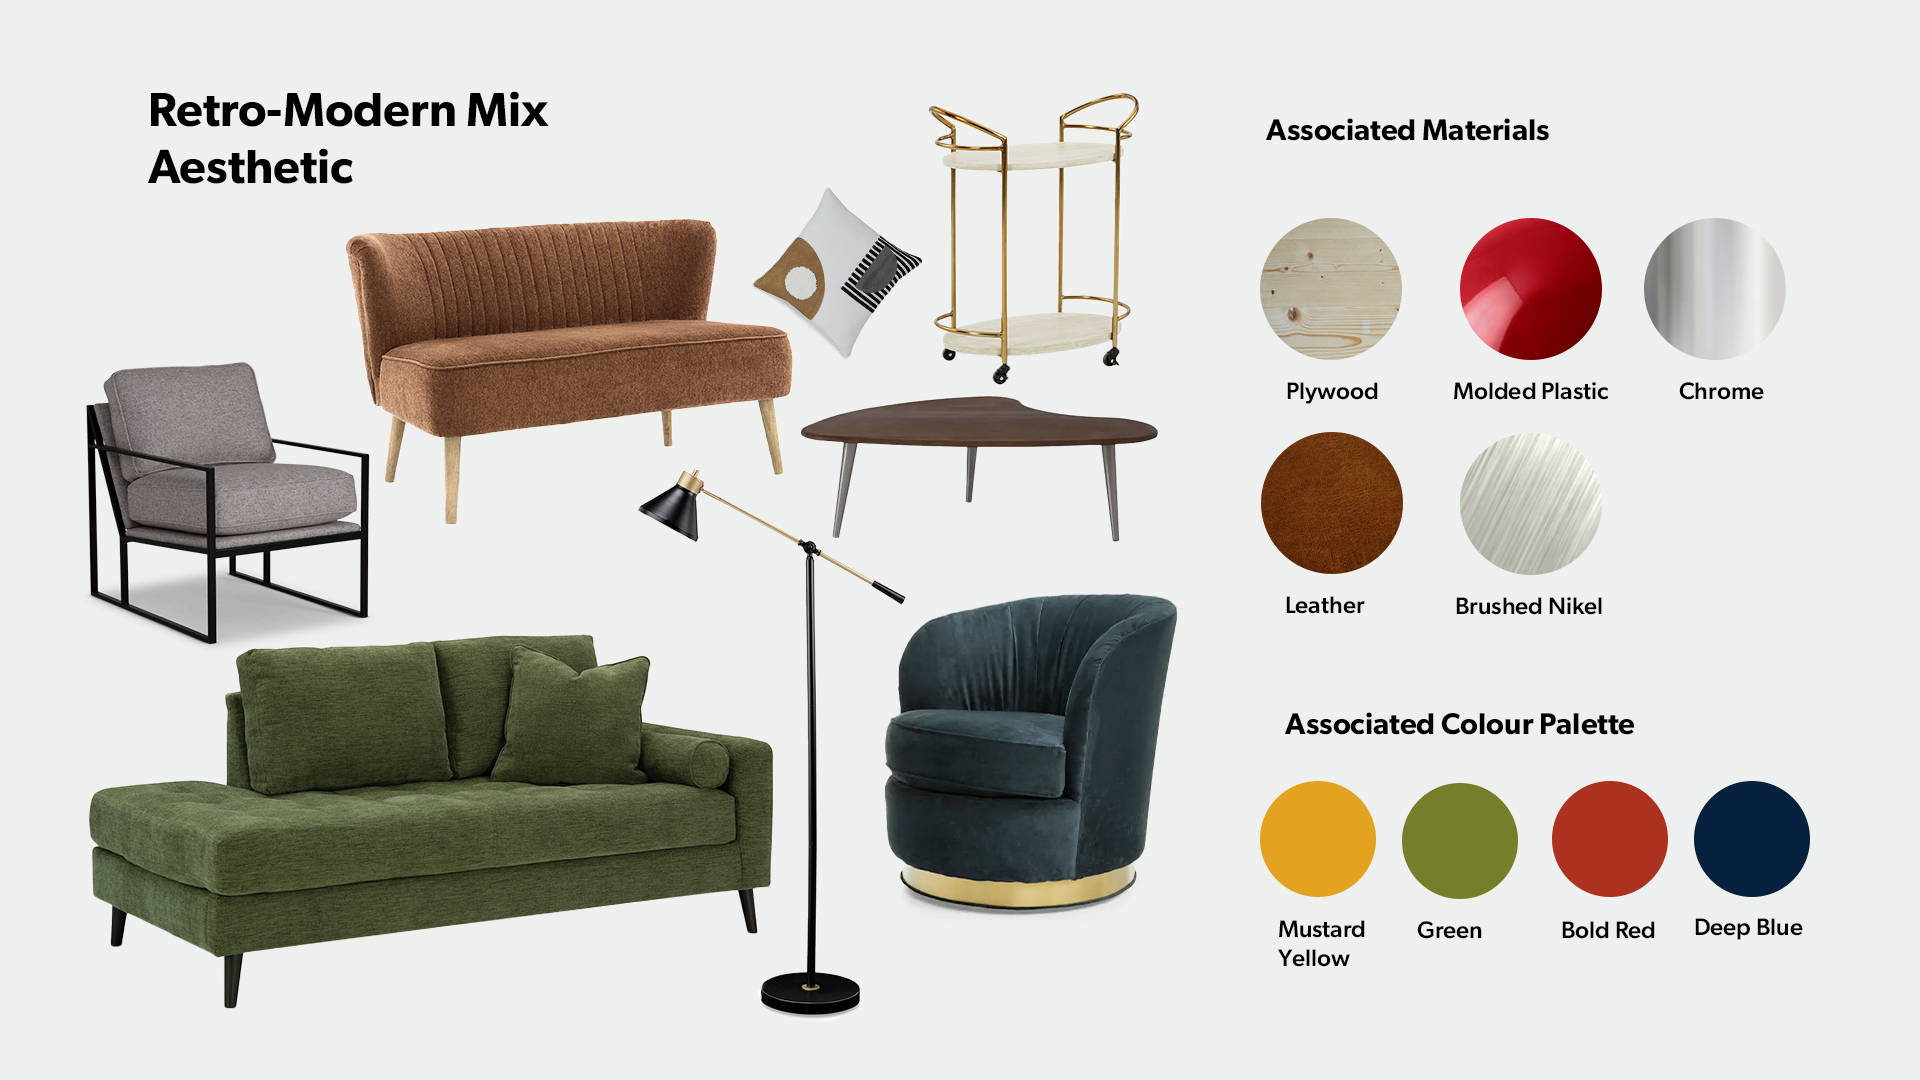 Retro-Modern Mix interior design trend explained